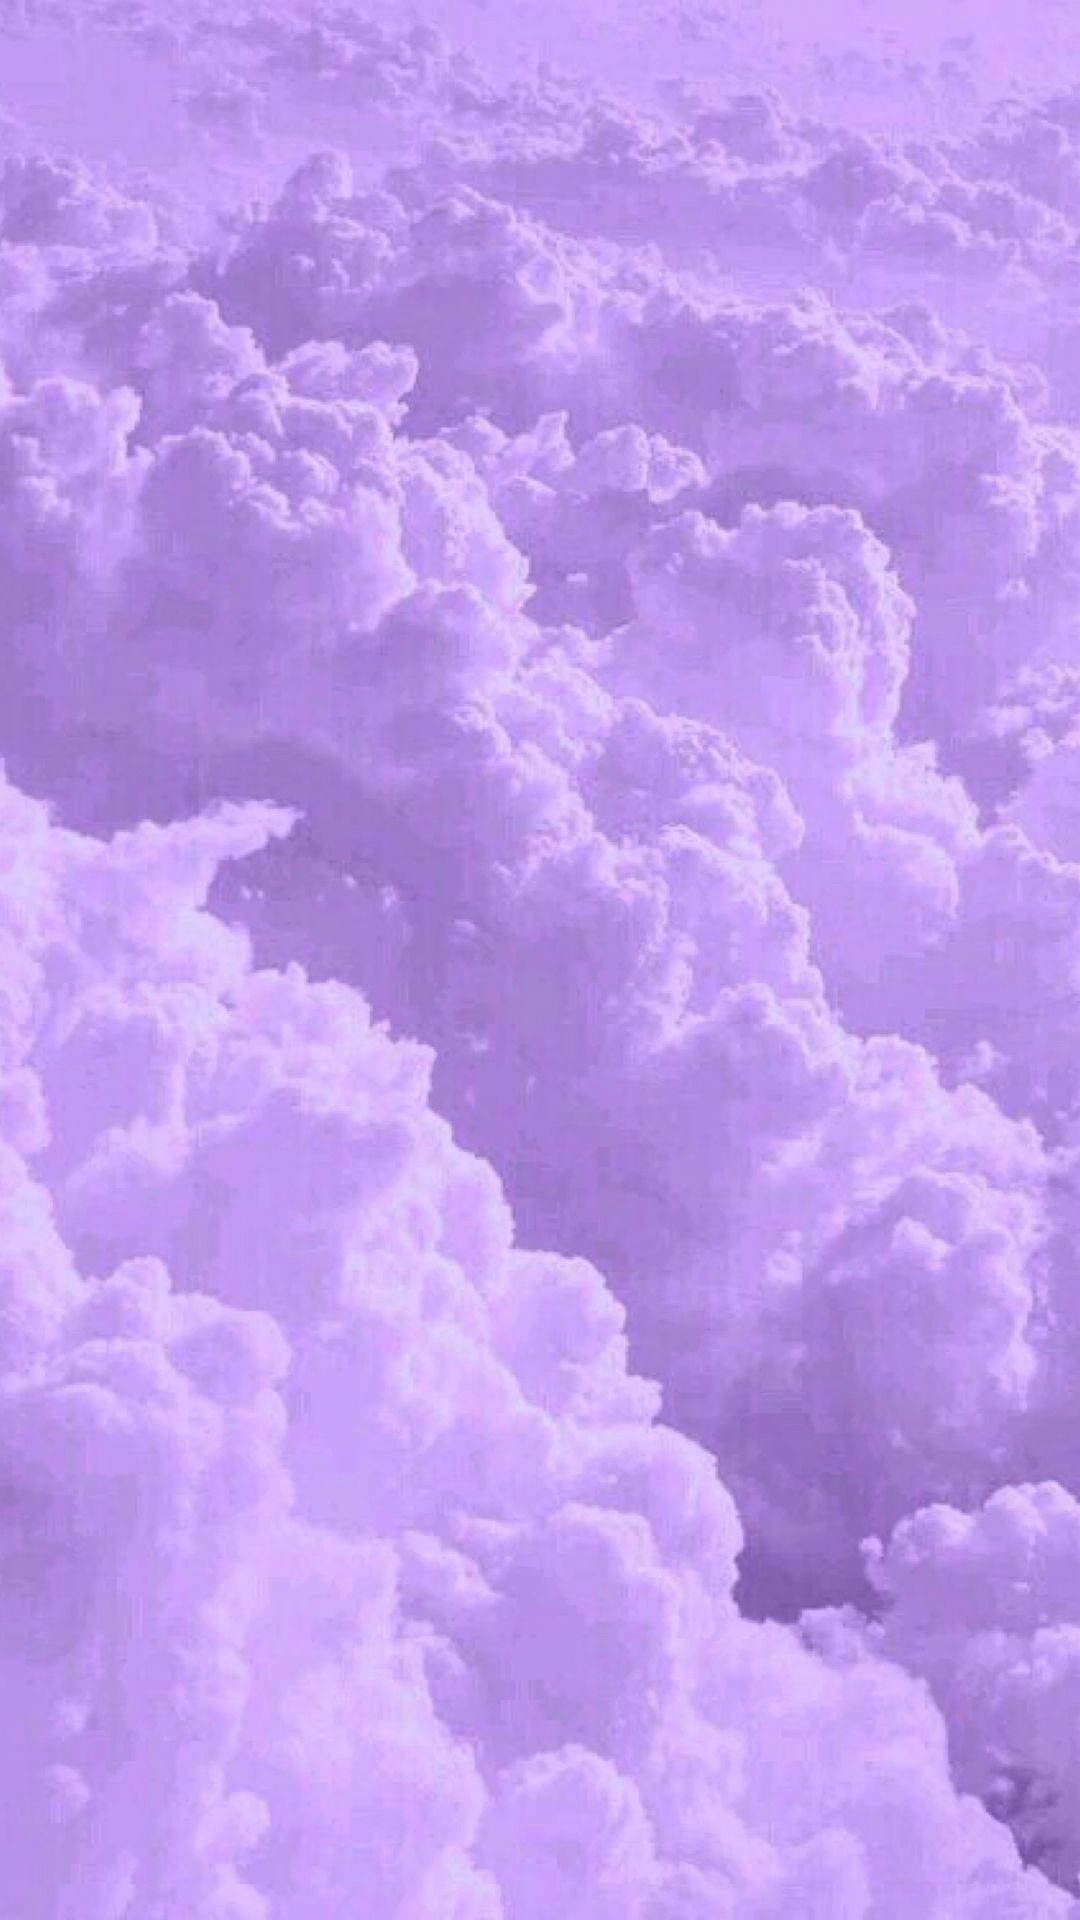 Light Purple Background Images  Free Download on Freepik